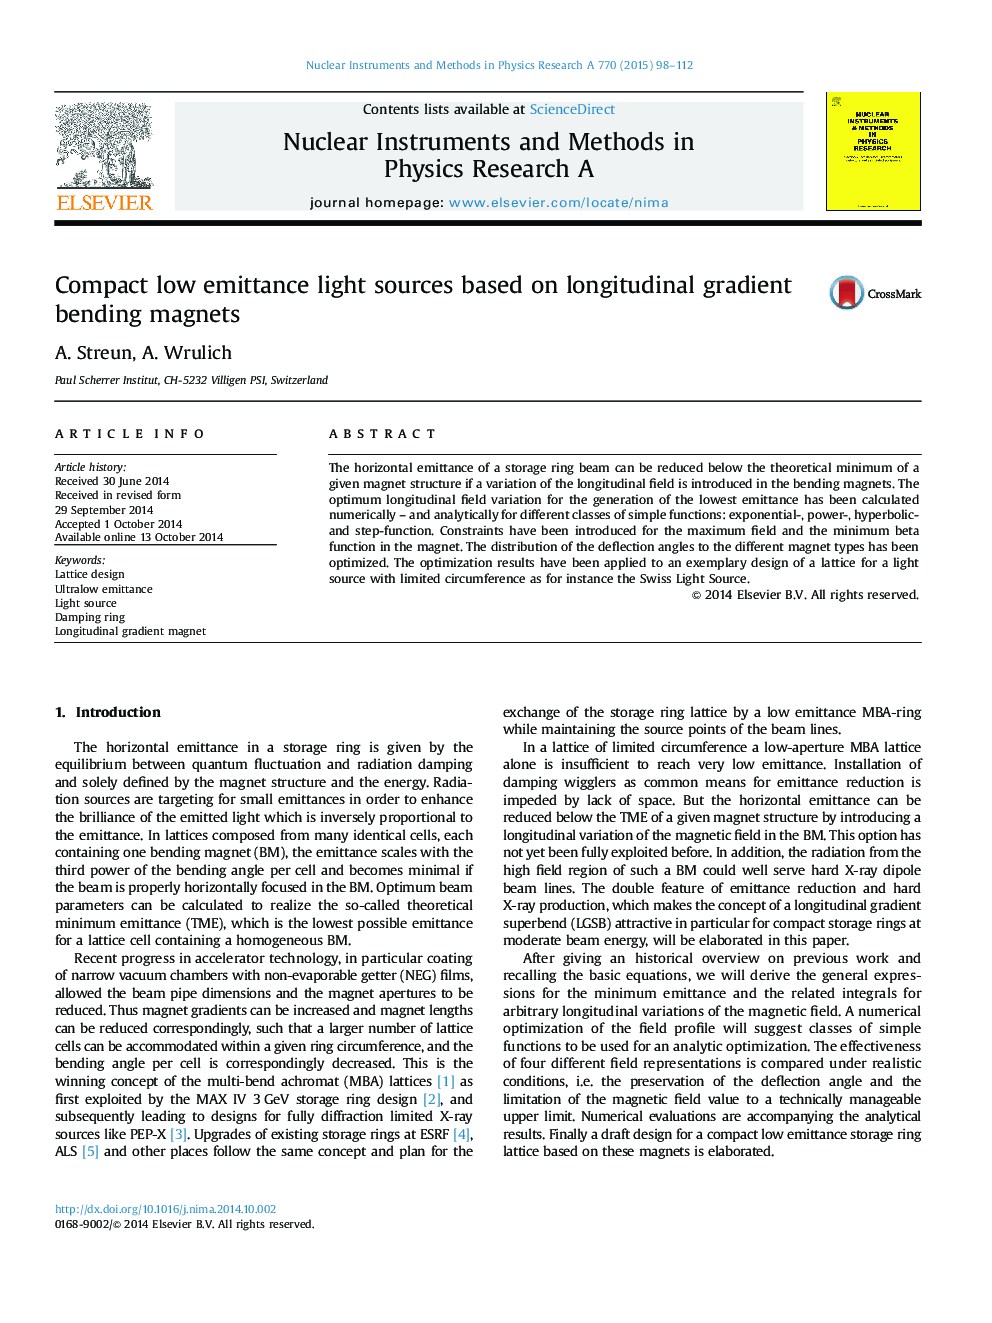 Compact low emittance light sources based on longitudinal gradient bending magnets